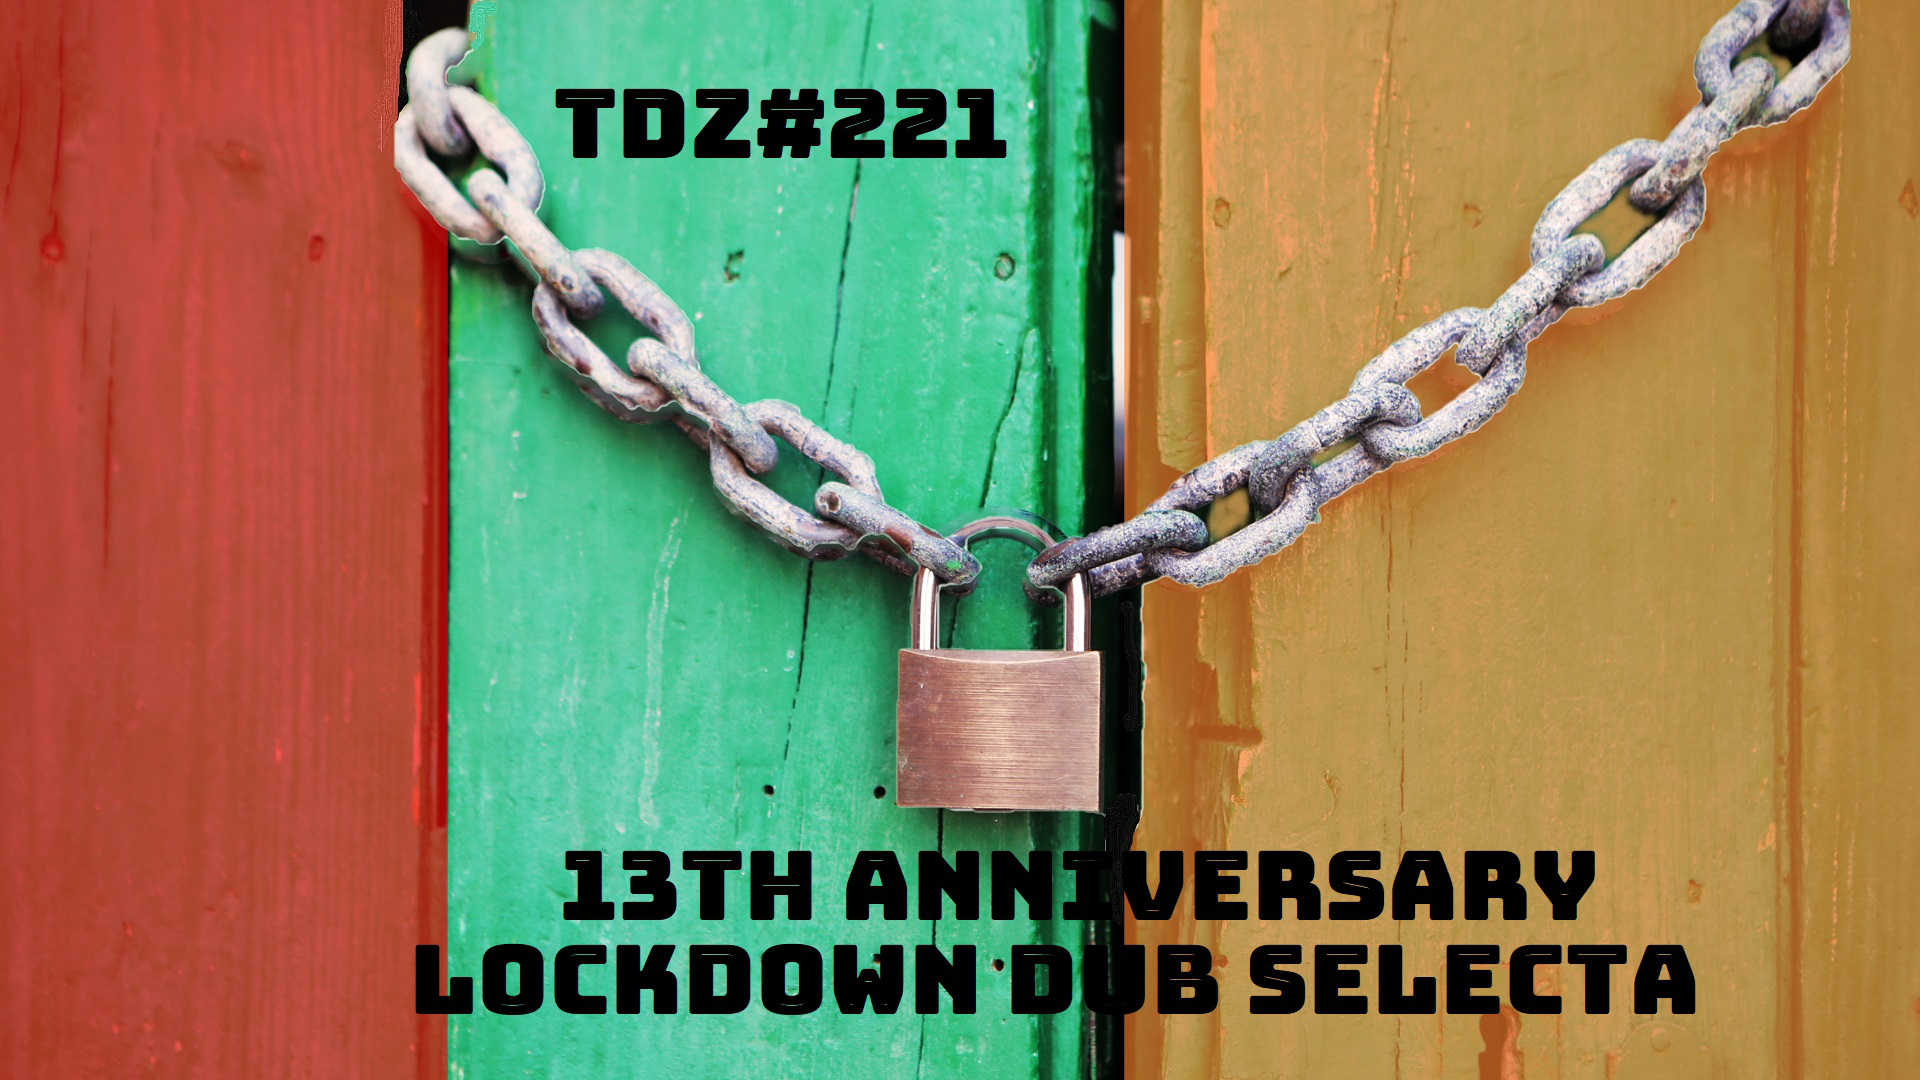 TDZ#221... 13th Anniversary Lockdown Dub Selecta.....